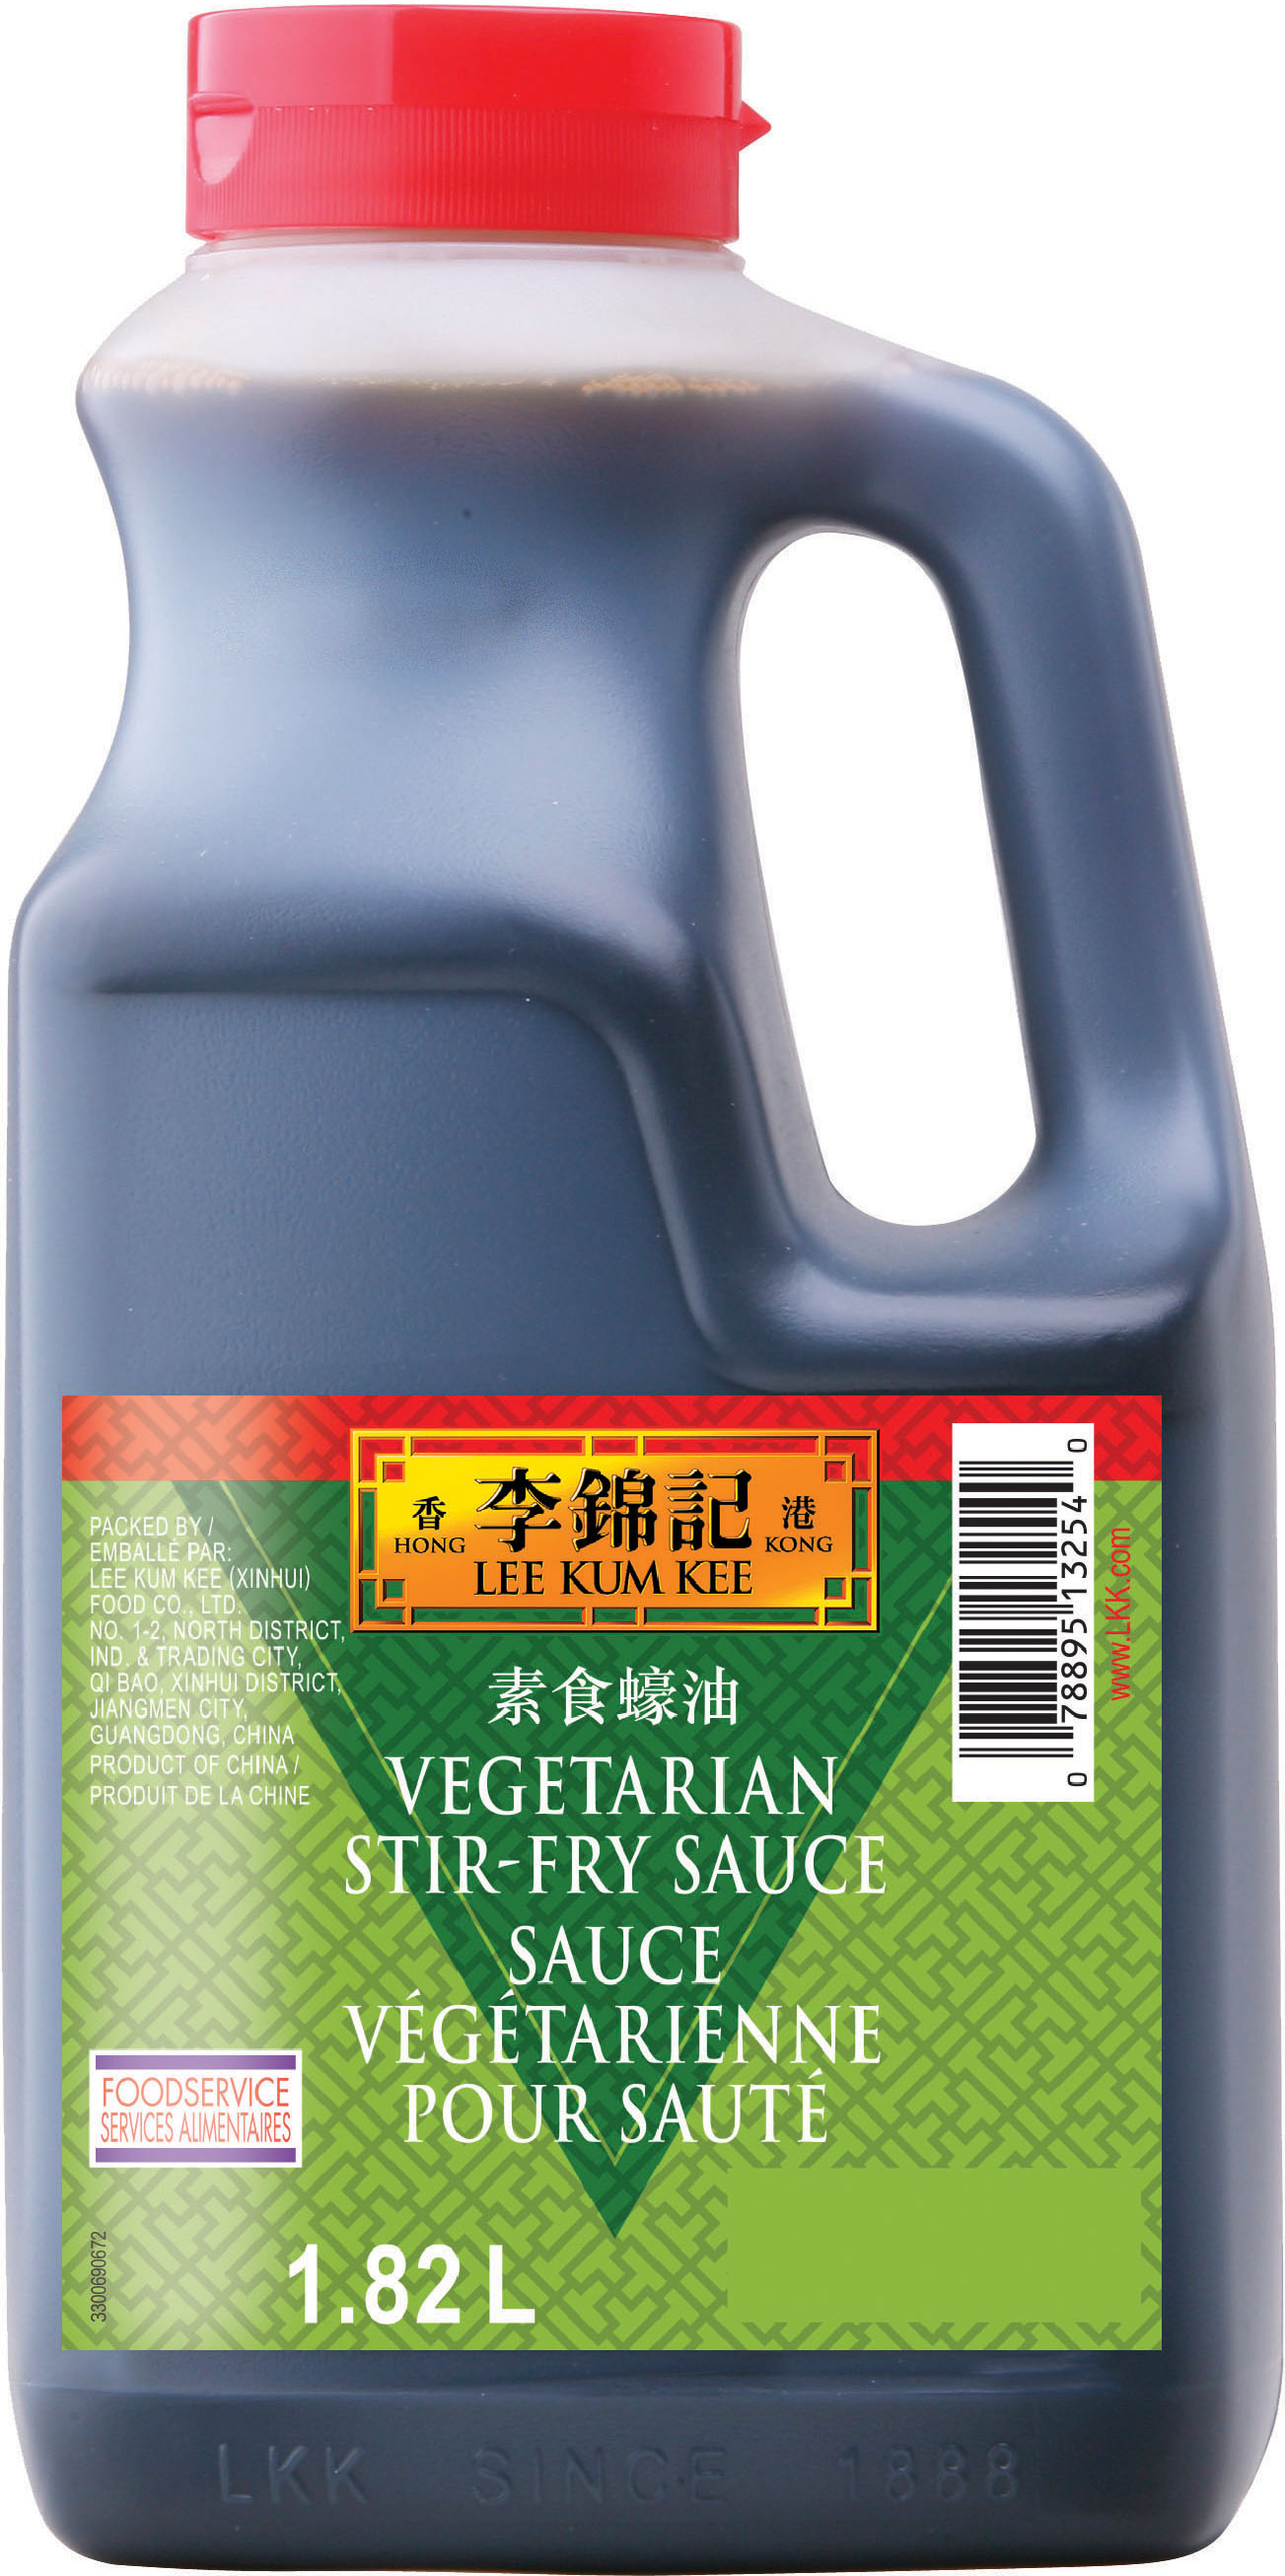 Vegetarian Stir-Fry Sauce, 1.82 L, Pail